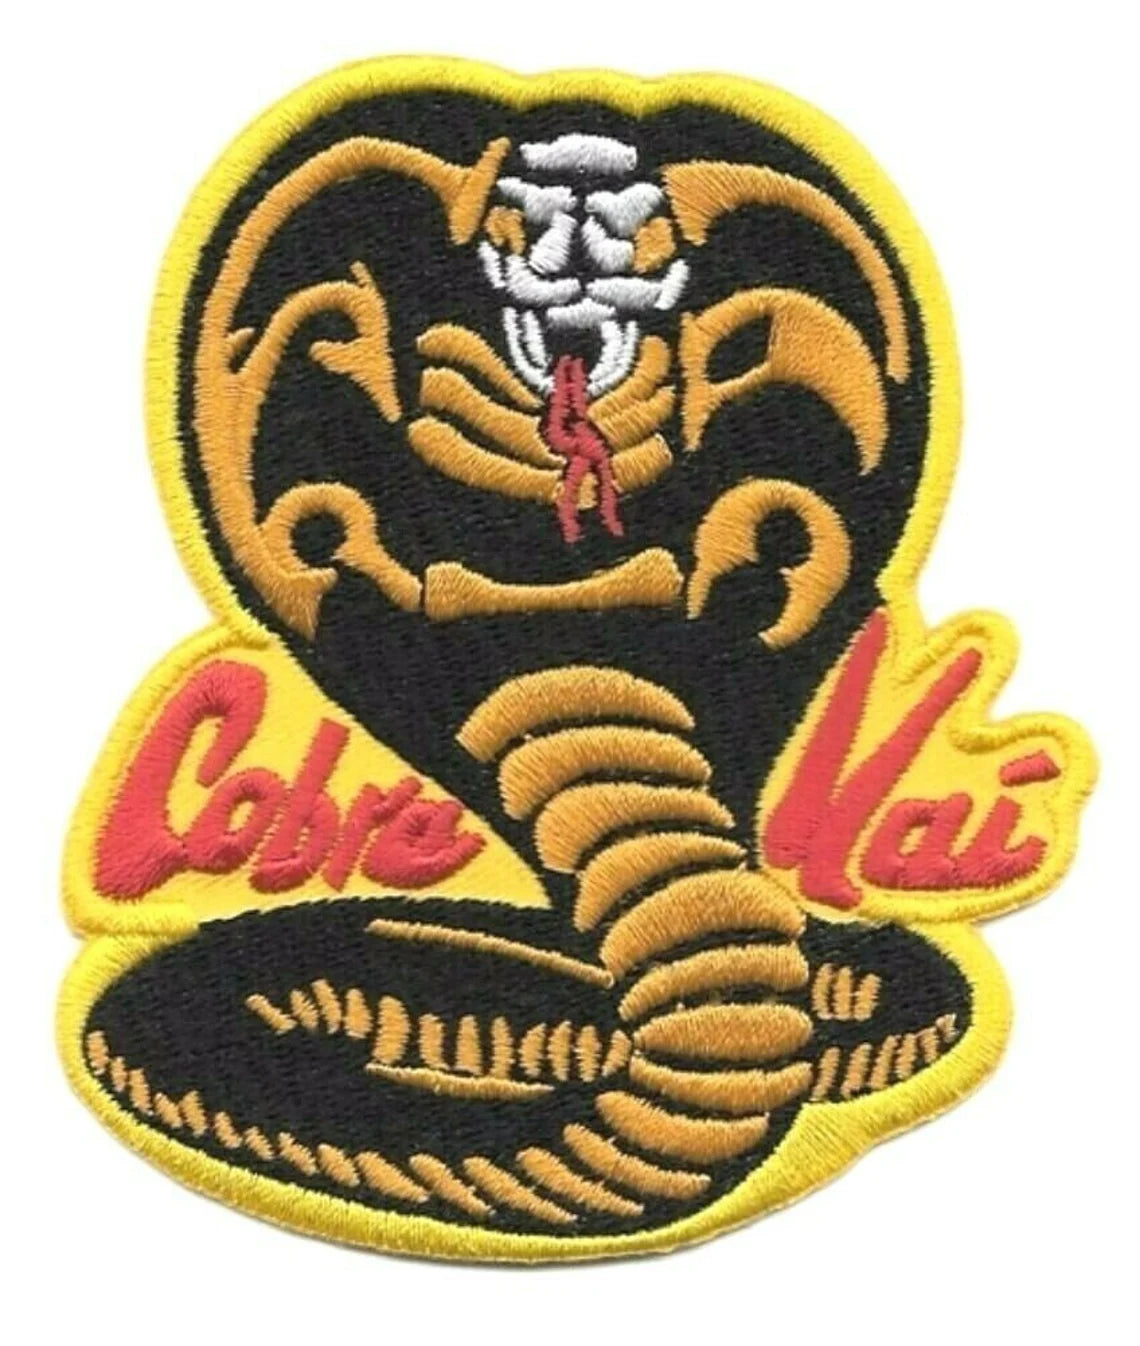 Cobra Kai Patch (3 Inch) The Karate Kid Iron or Sew-on Badge Snake Logo Dojo DIY Costume Patches